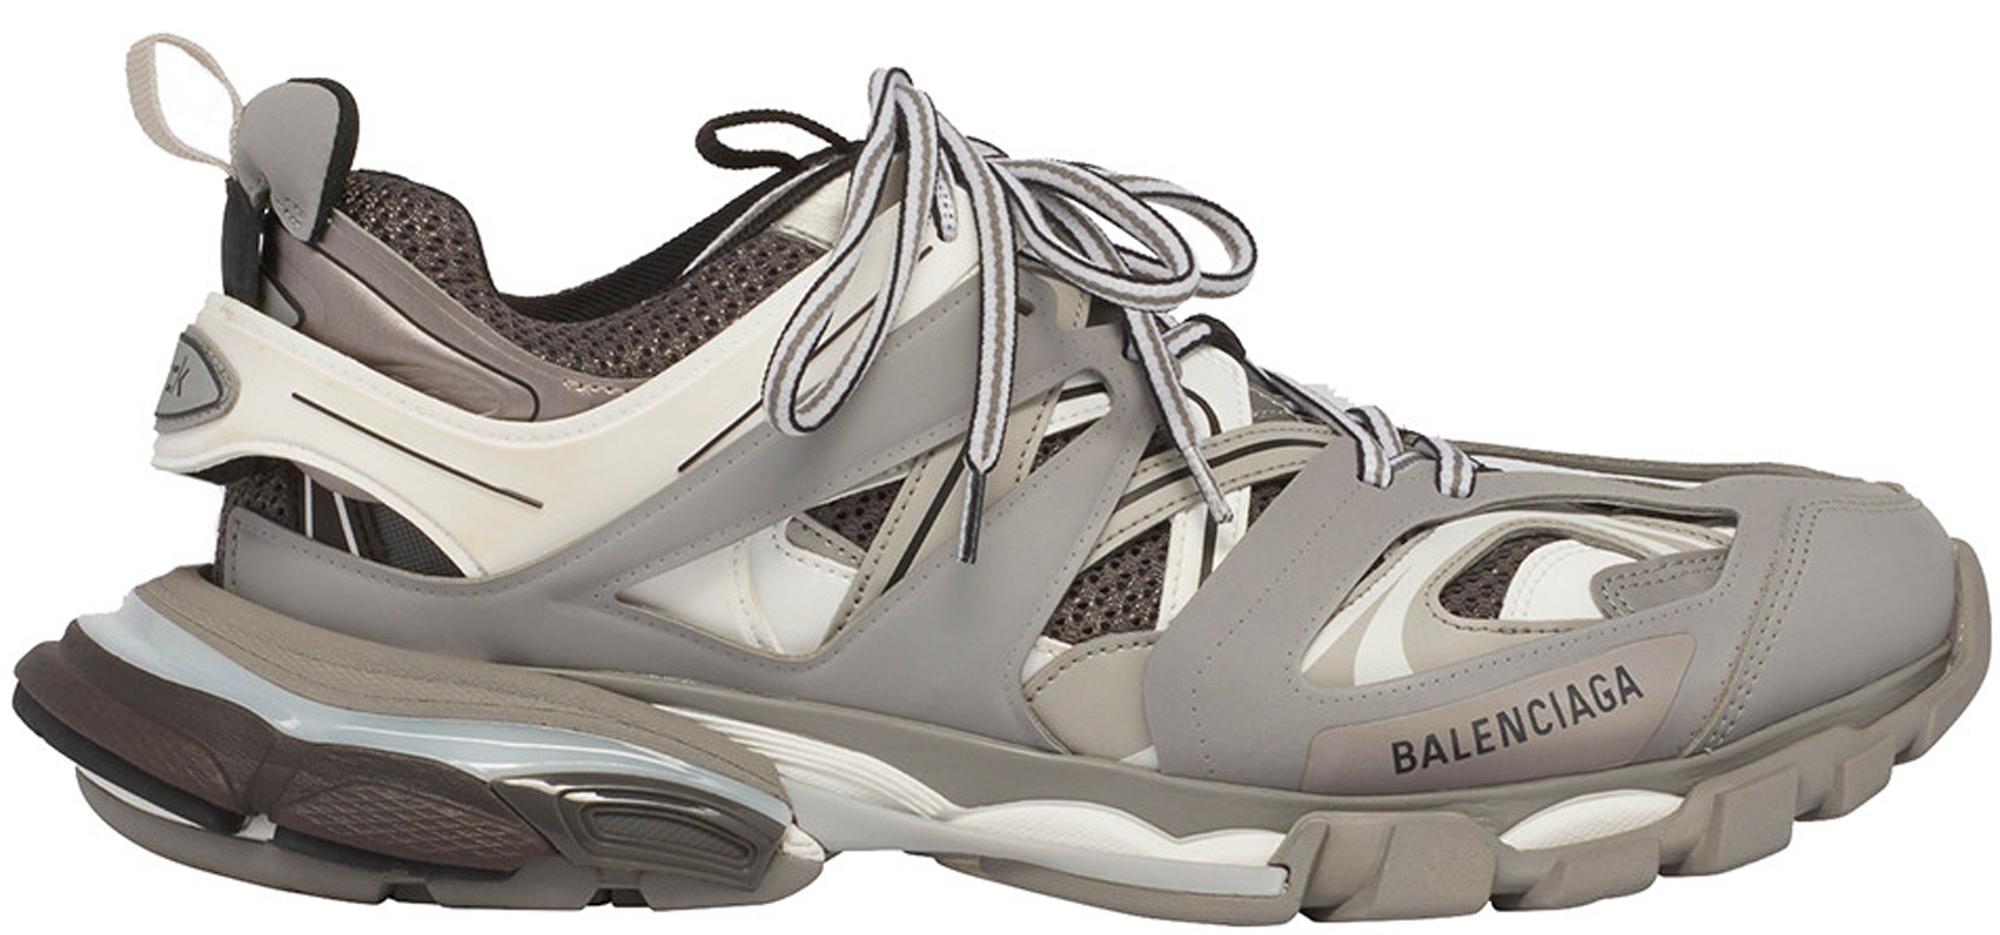 Balenciaga Track Grey in Grey/Grey-White (Gray) for Men - Lyst